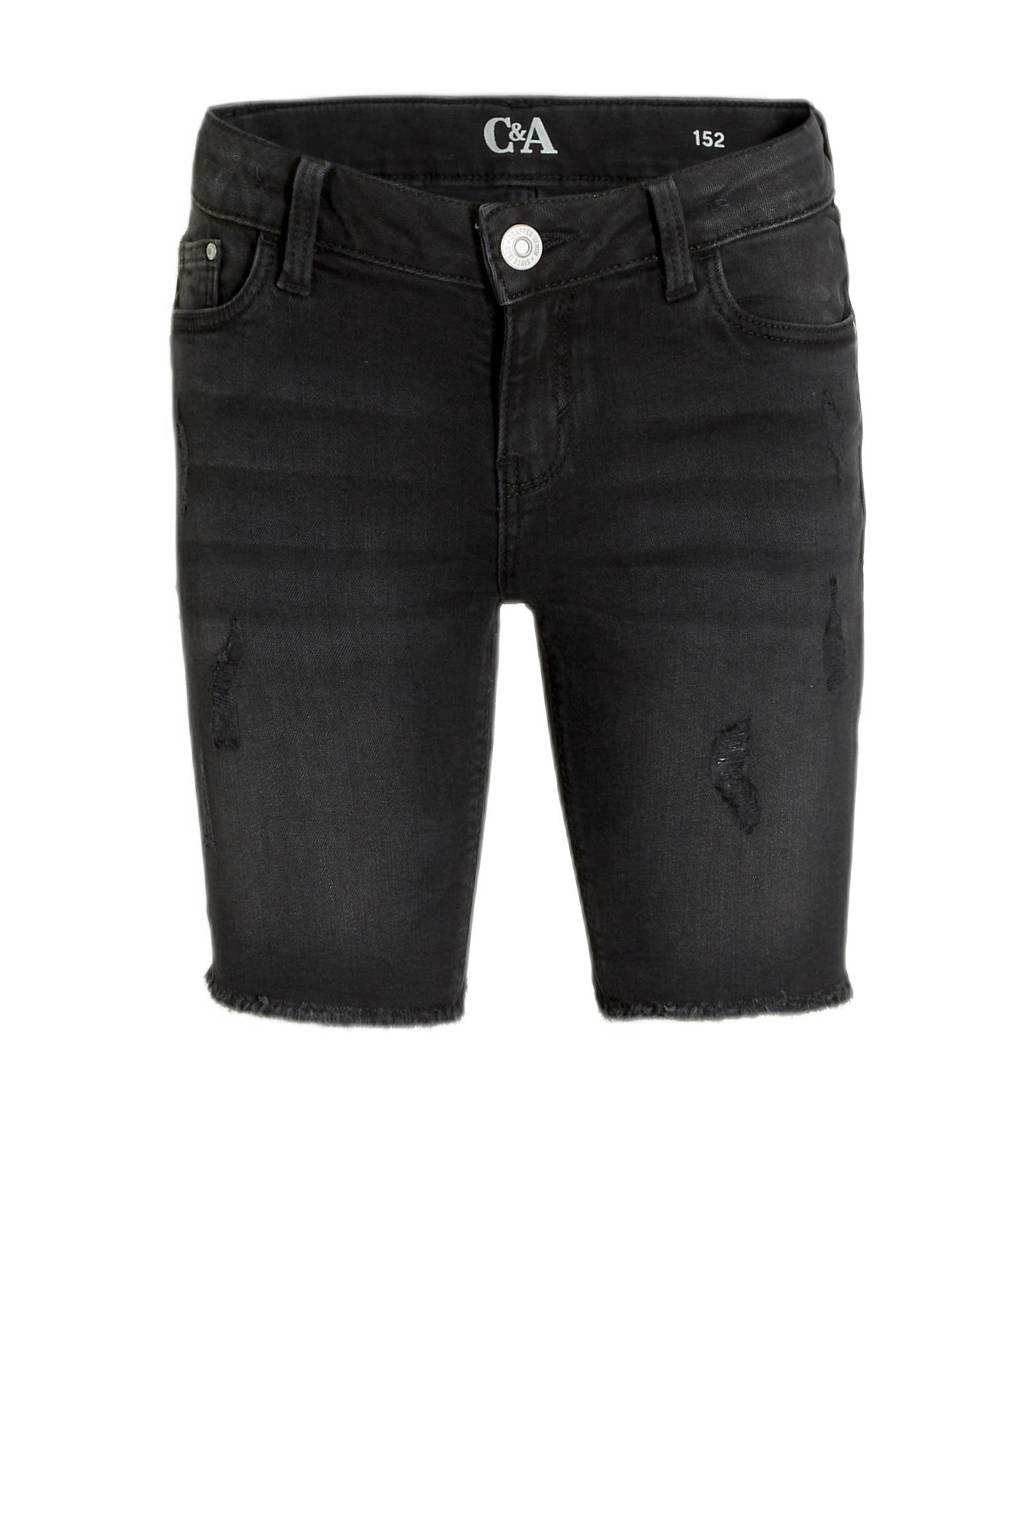 C&A slim fit jeans bermuda zwart